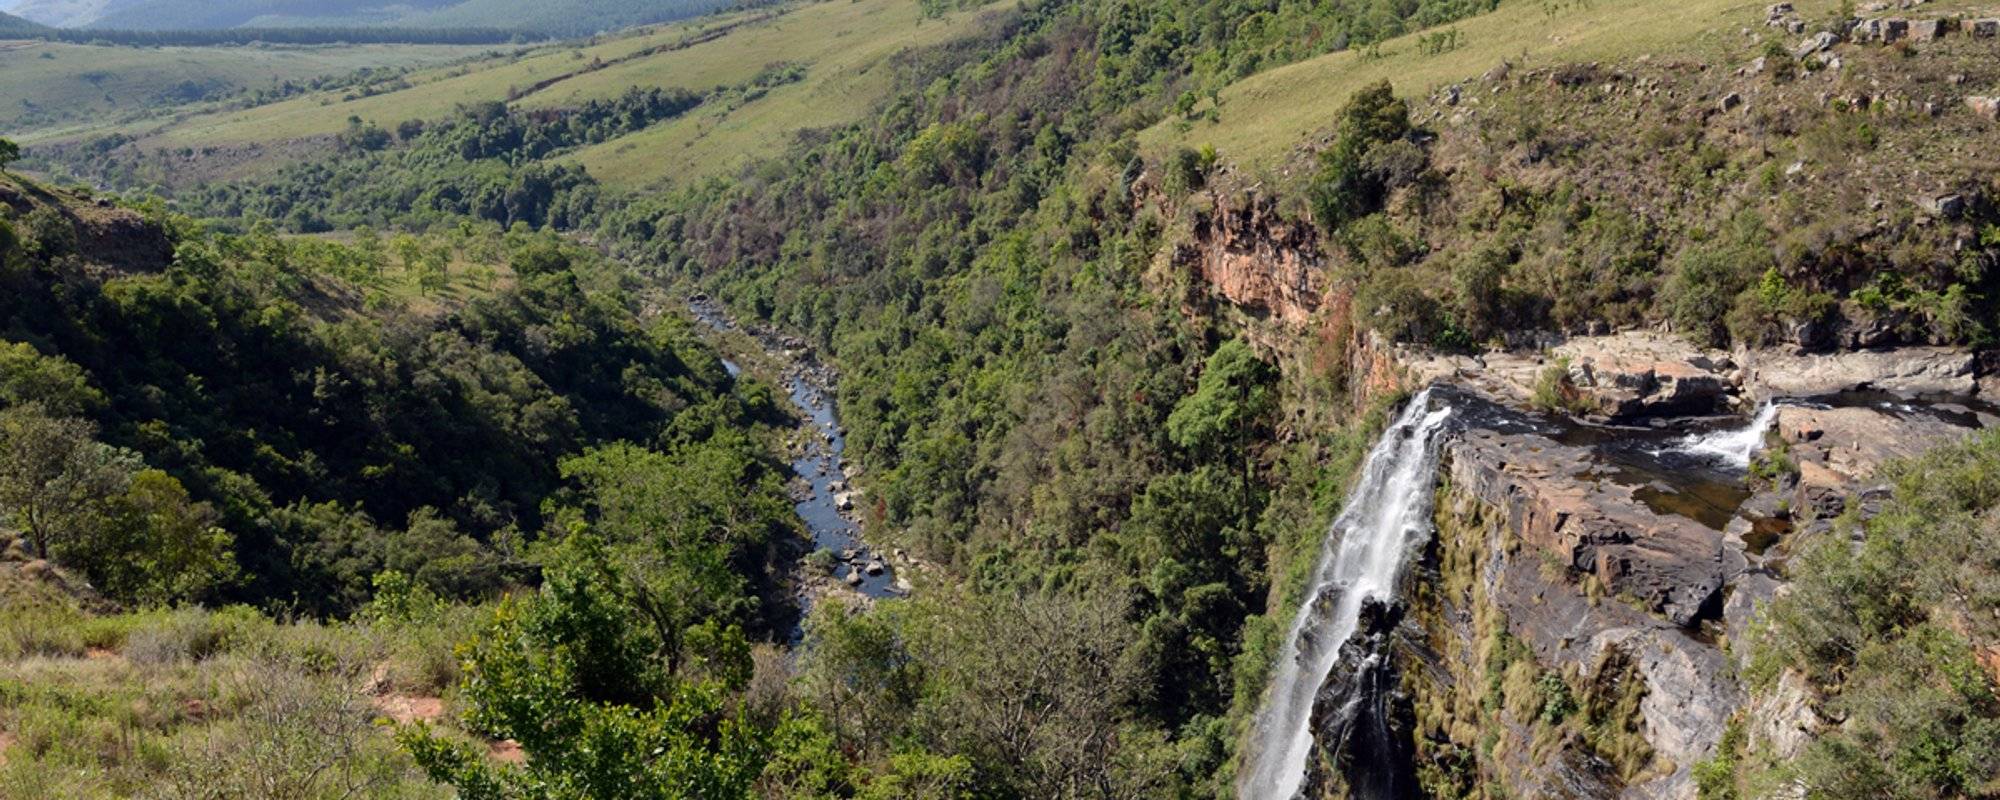 South-Africa – Panoramic views at Blyde River Canyon